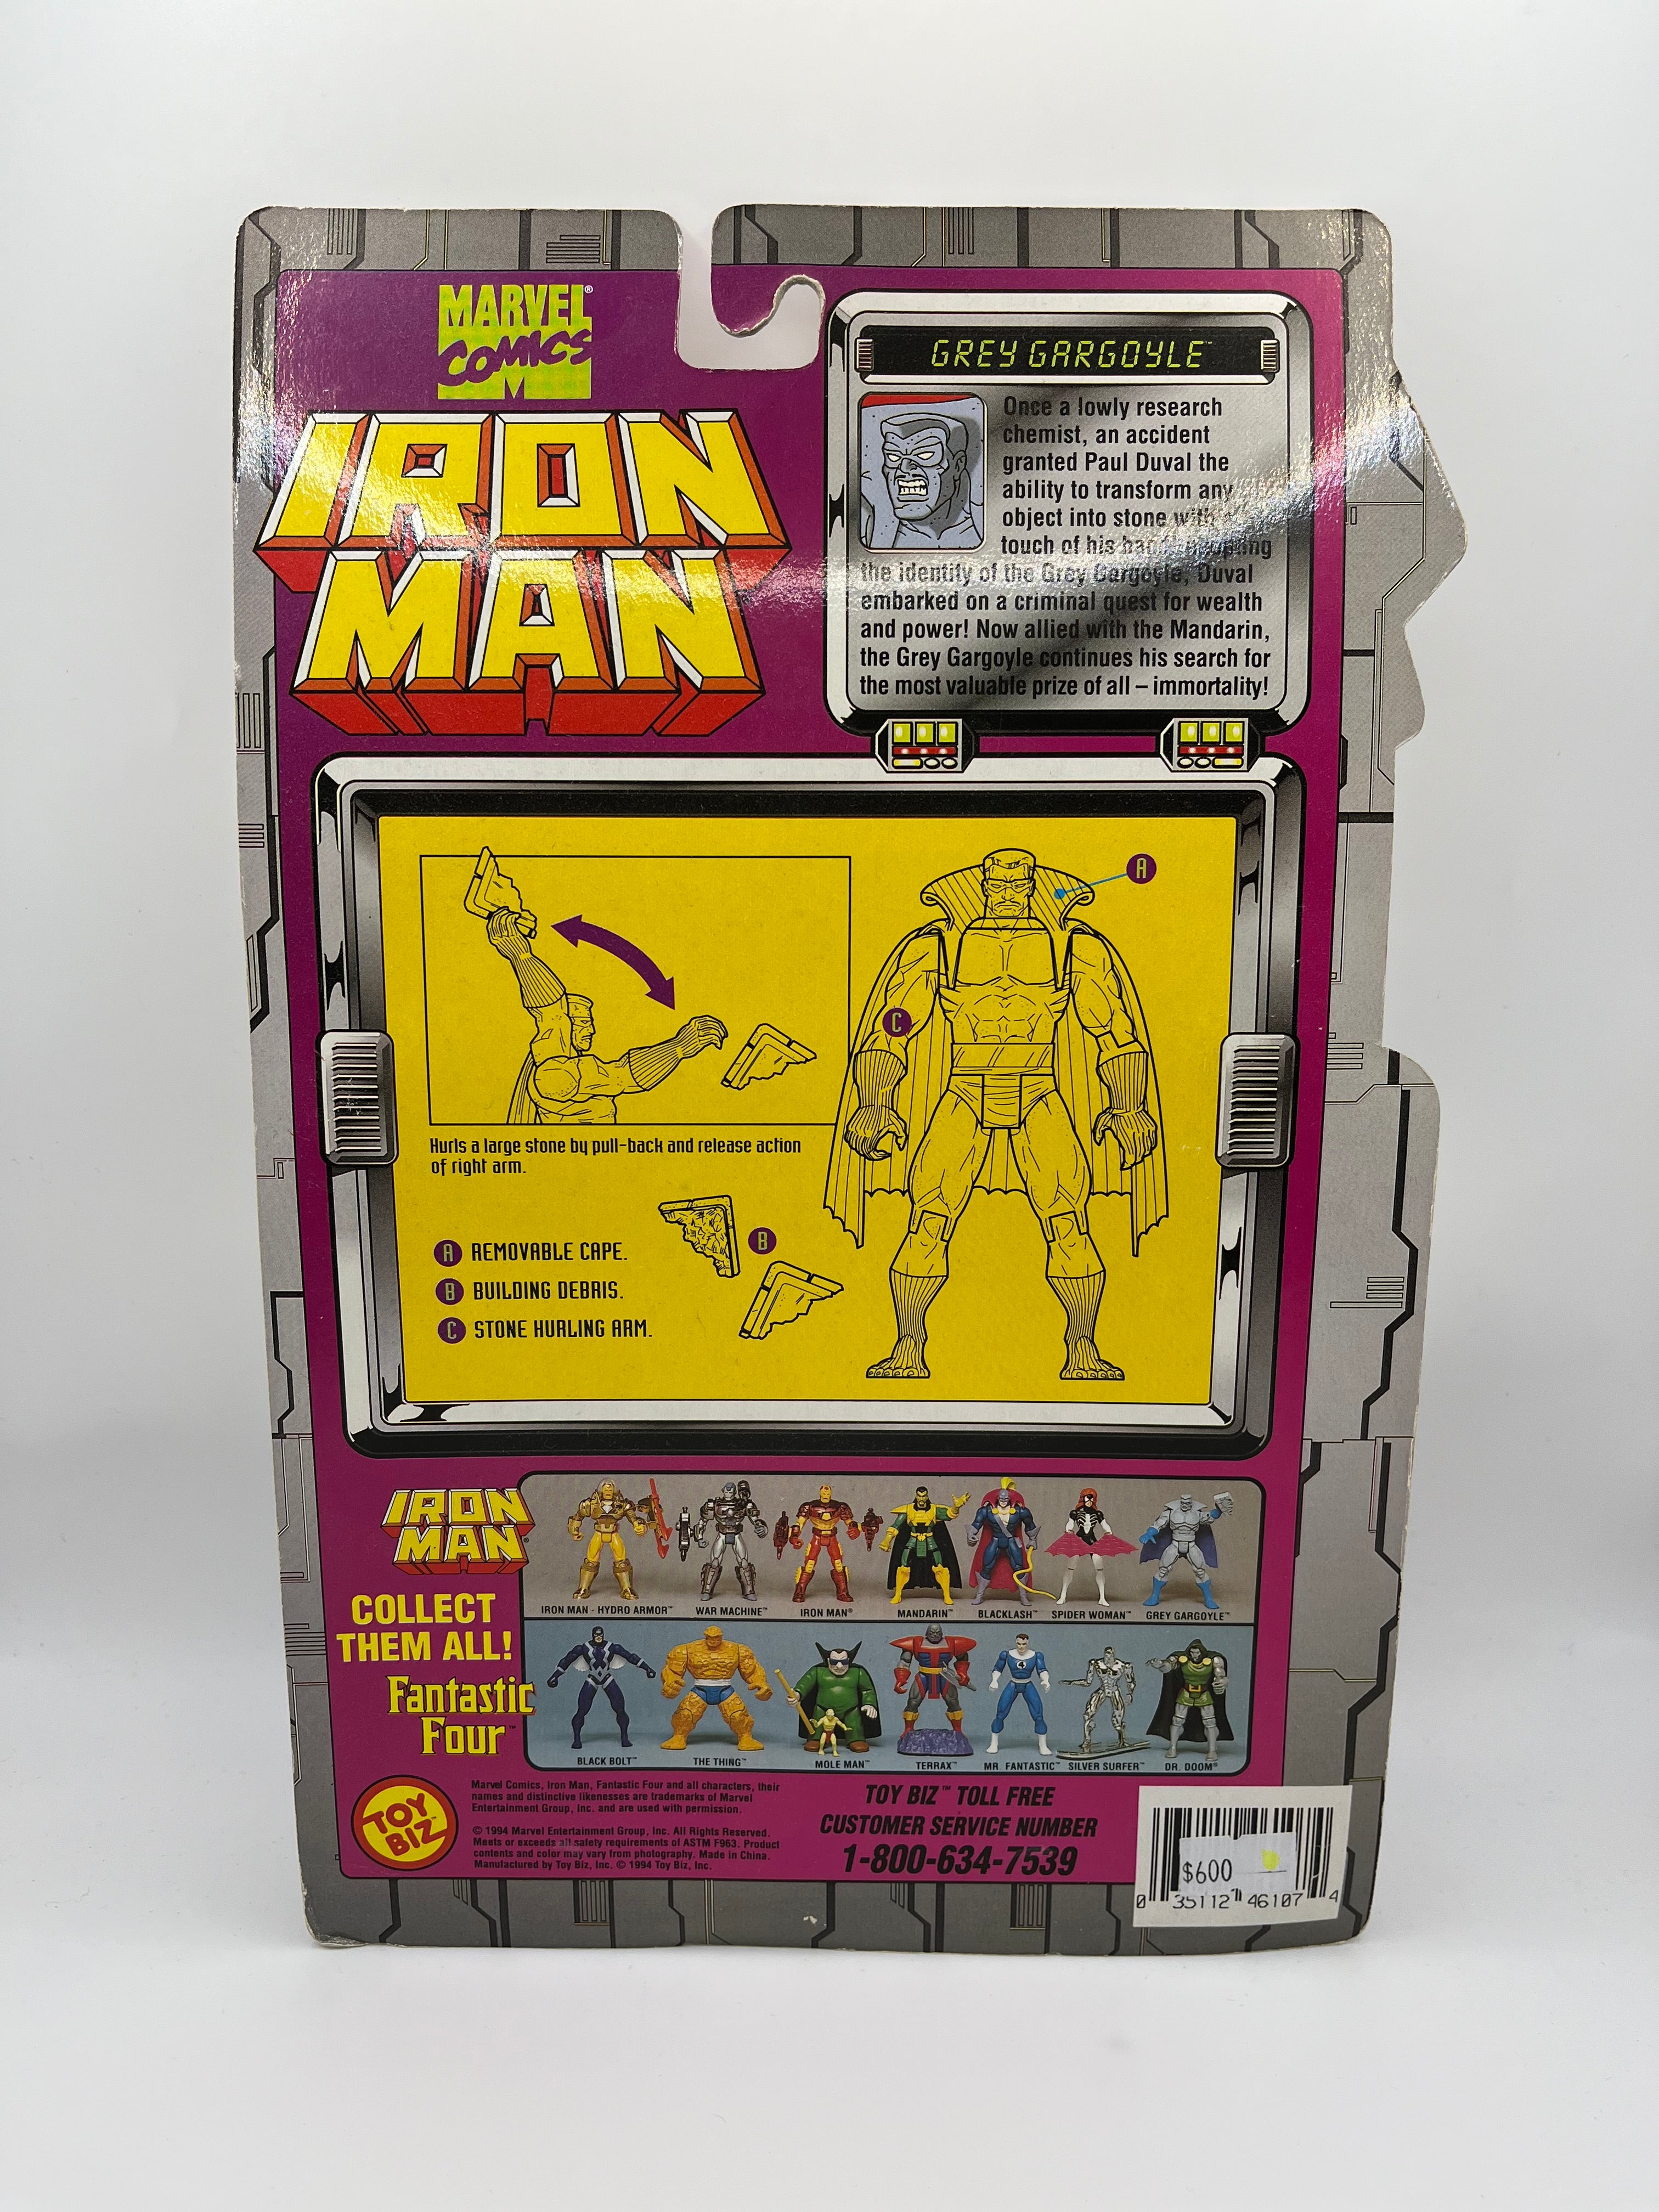 Iron Man The Animated Series Grey Gargoyle With Stone Hurling Action Toy Biz